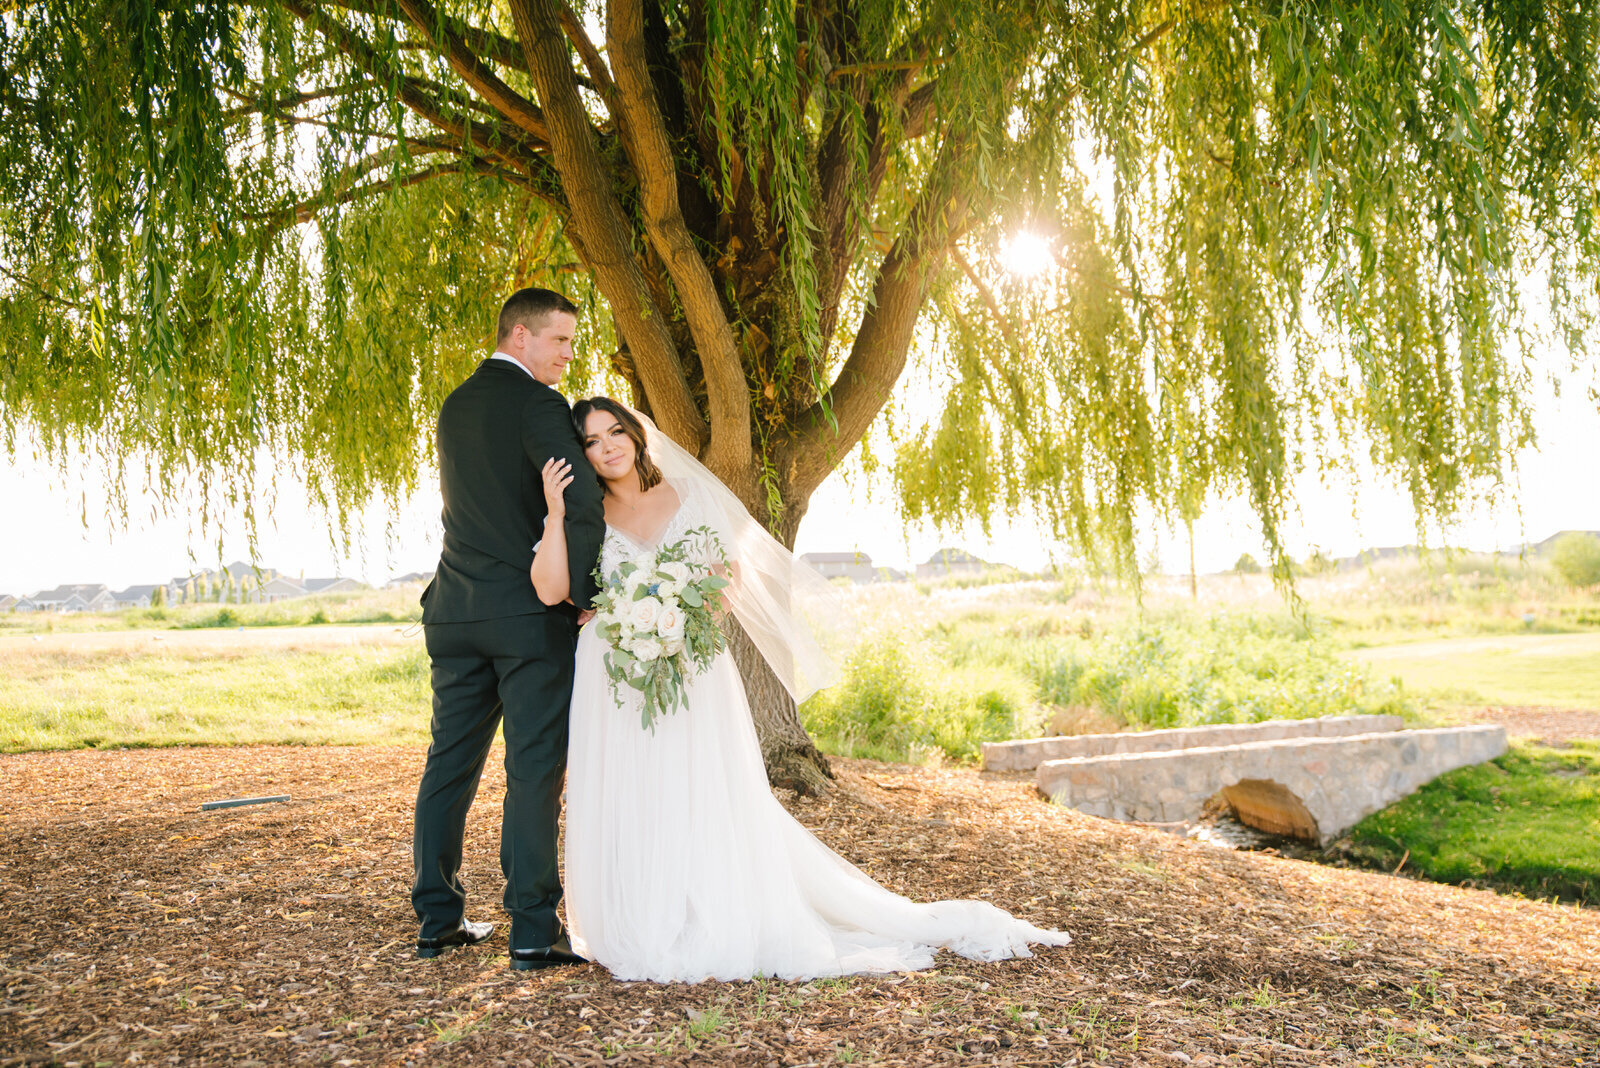 Jackson Hole photographers capture outdoor elopement pictures at golden hour